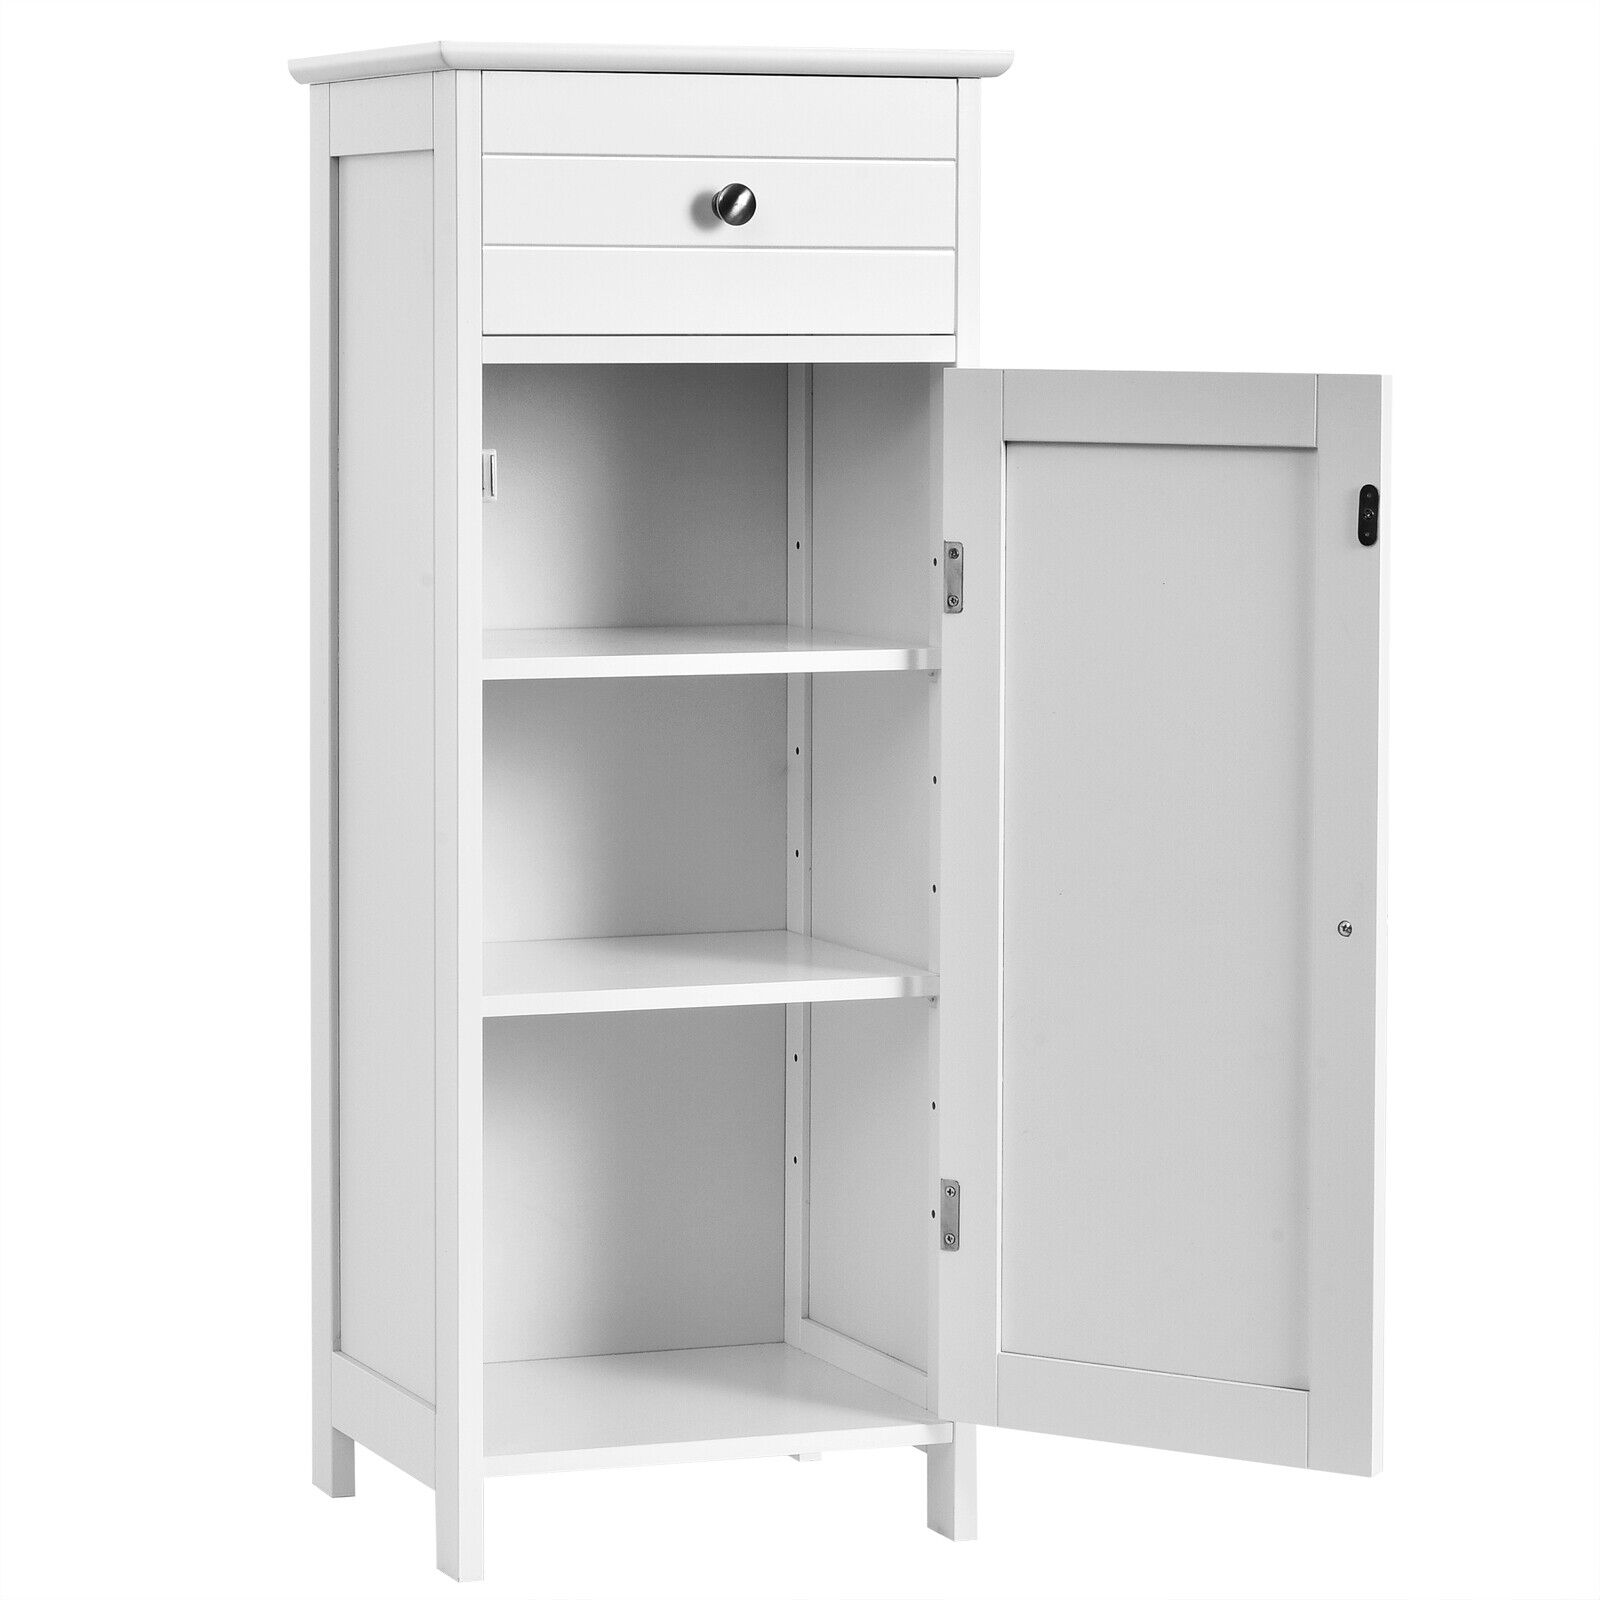 White_1-Door_Freestanding_Bathroom_Storage_Cabinet_with_Drawer_and_Adjustable_Shelfs-9.jpg